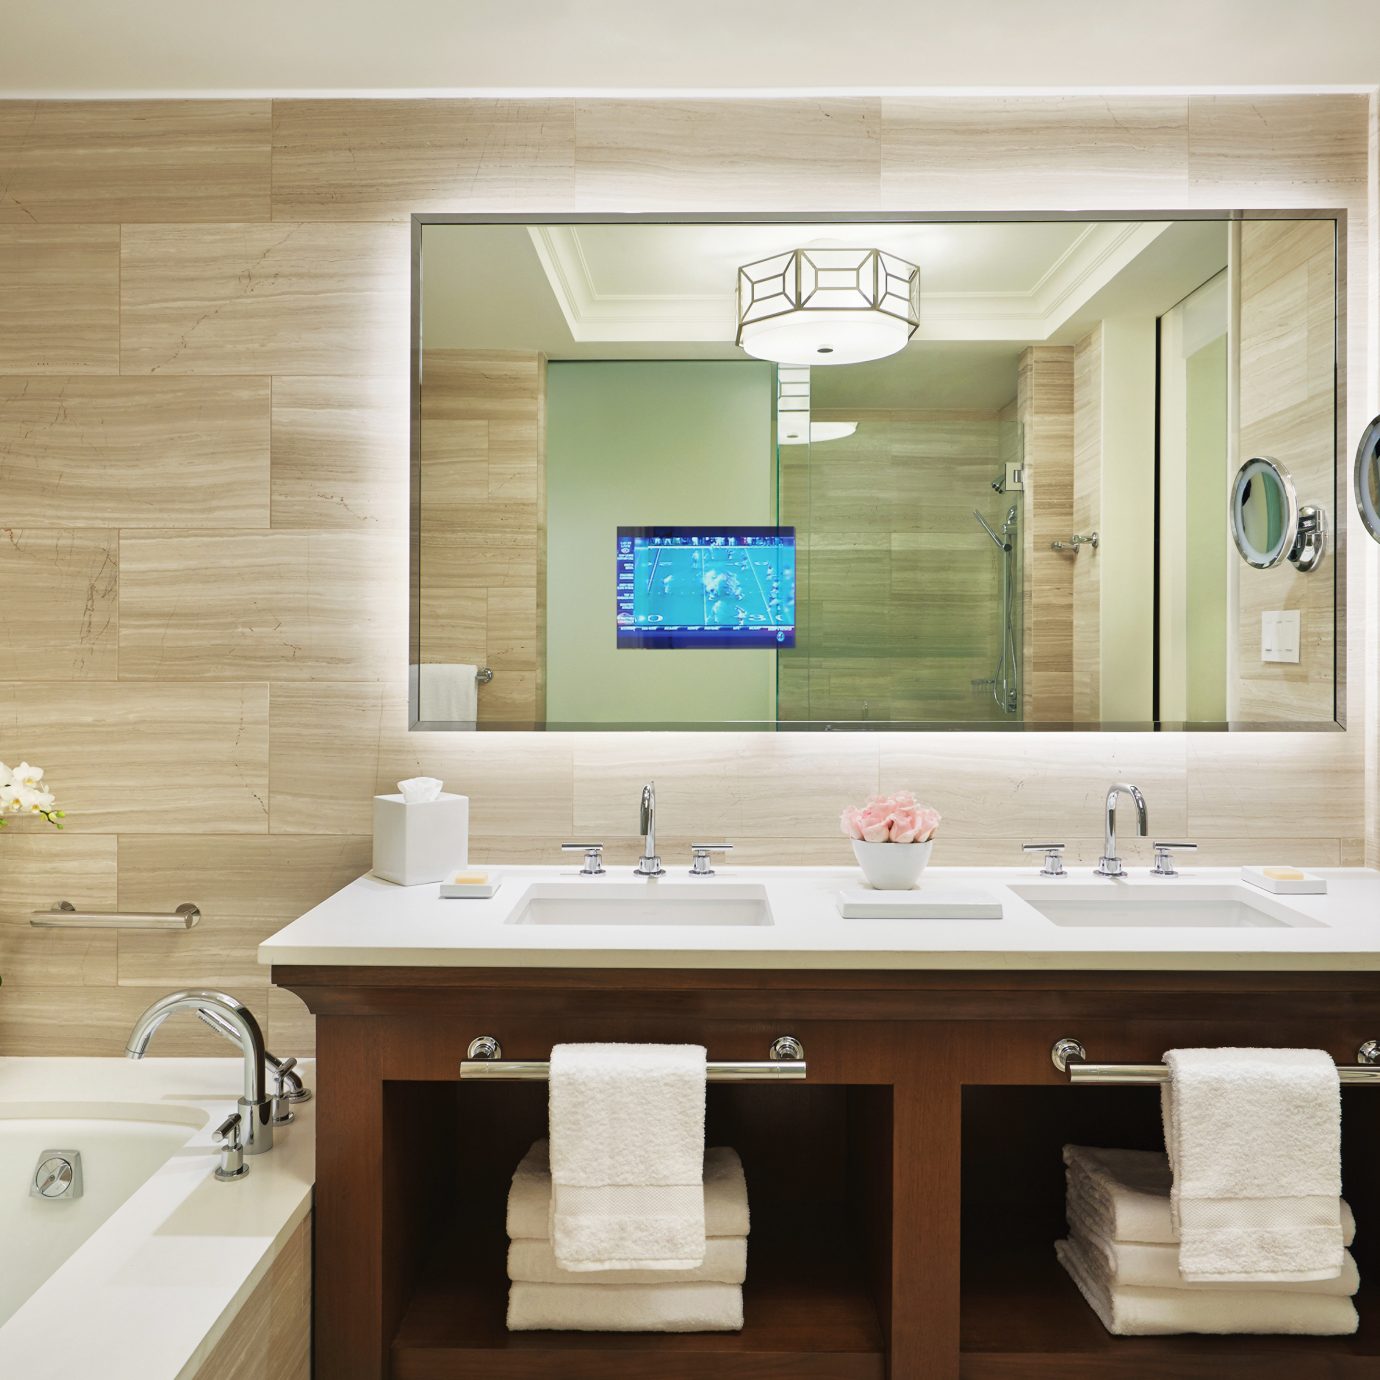 Bath Classic Family Resort bathroom sink mirror cabinetry home plumbing fixture bathroom cabinet tub